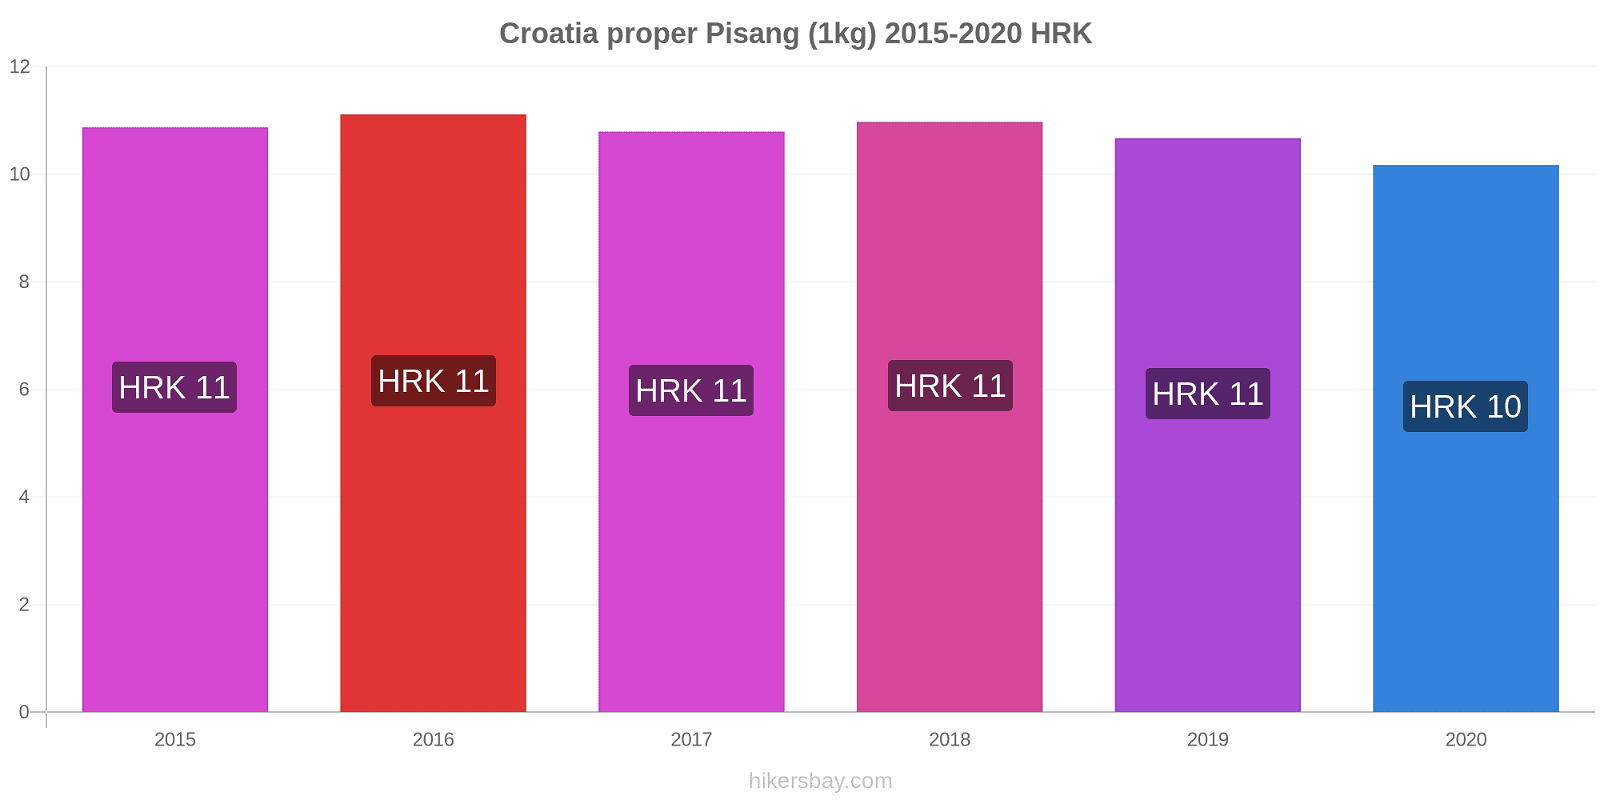 Croatia proper perubahan harga Pisang (1kg) hikersbay.com